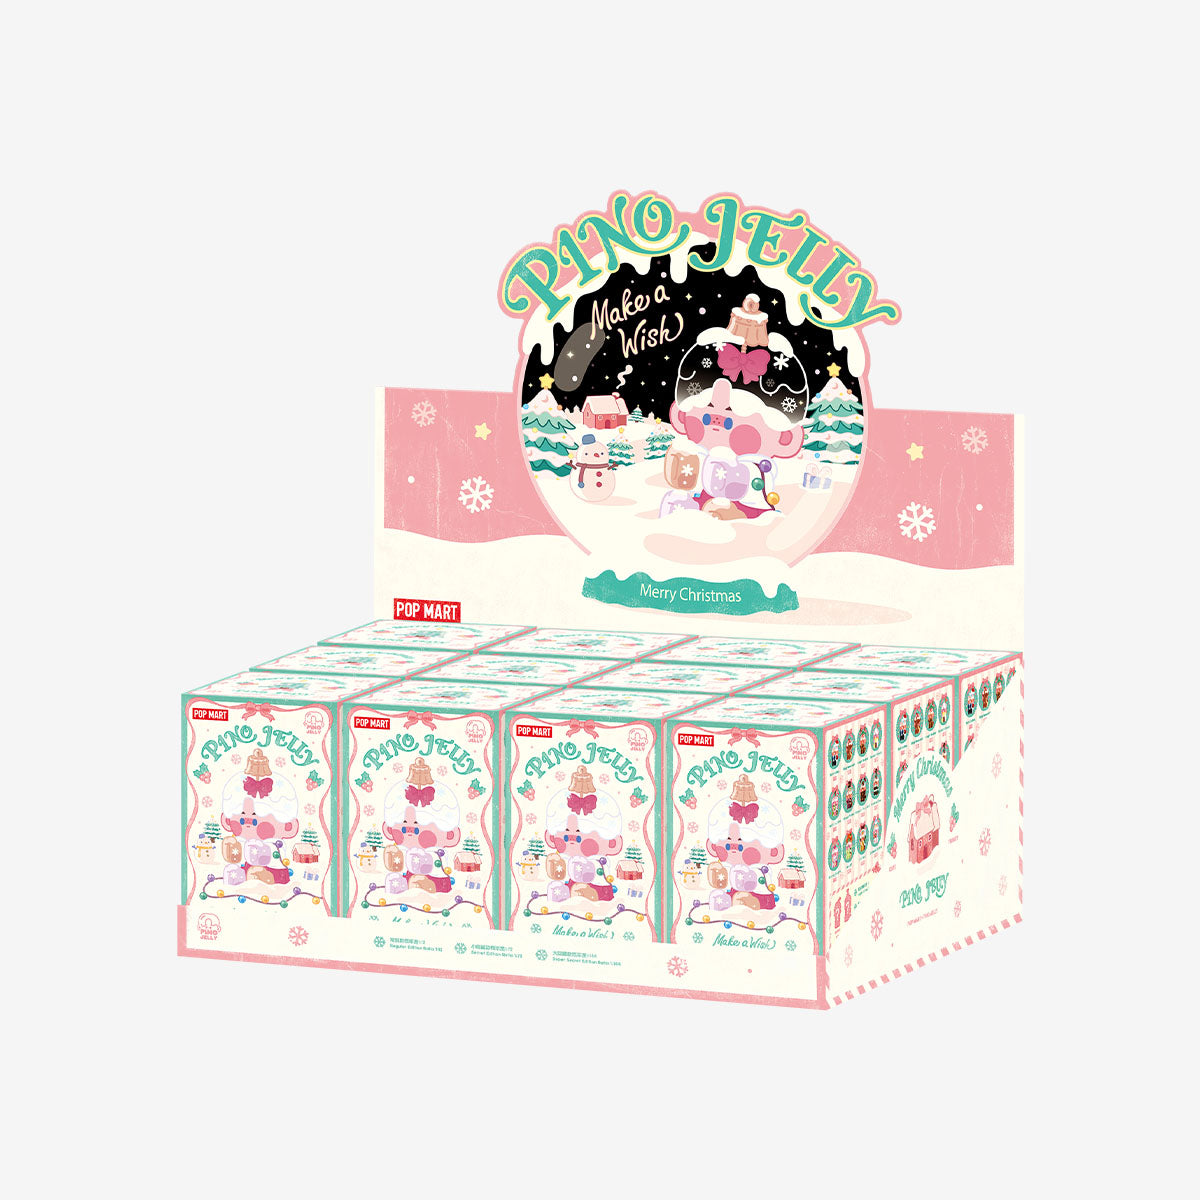 【XMAS】Pop Mart: Pino Jelly Make a Wish Series Blind Box